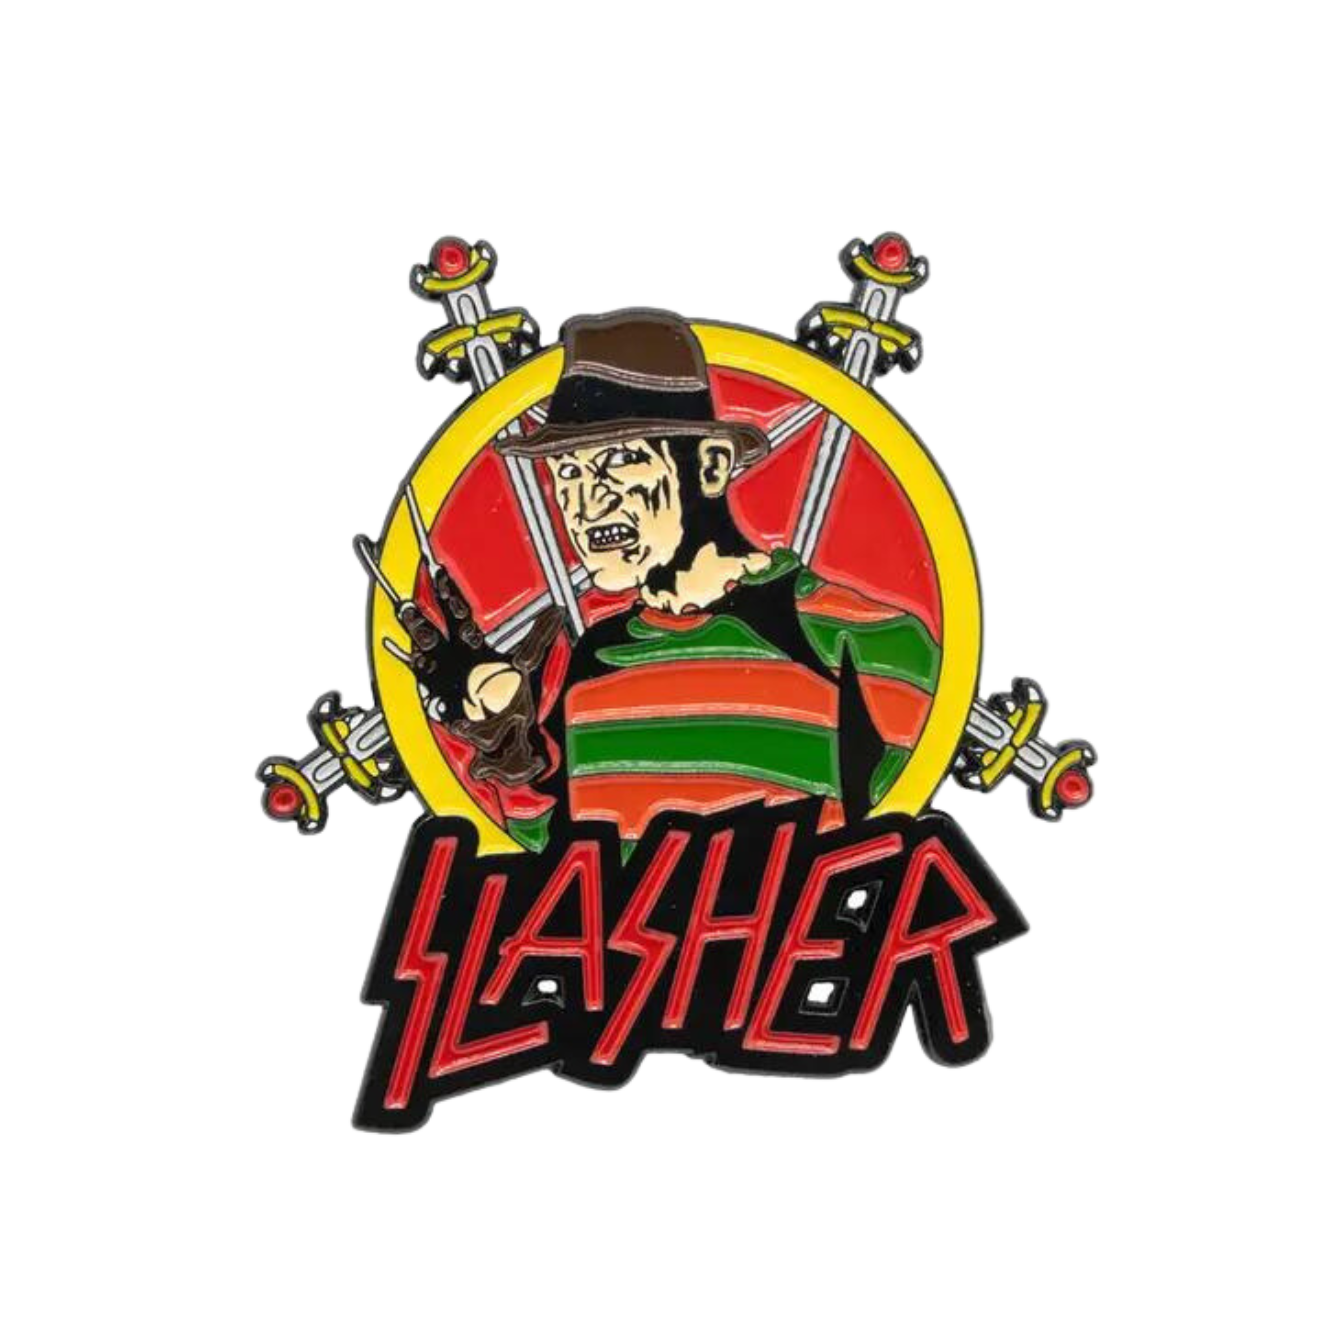 Slasher - Freddy Krueger Pin